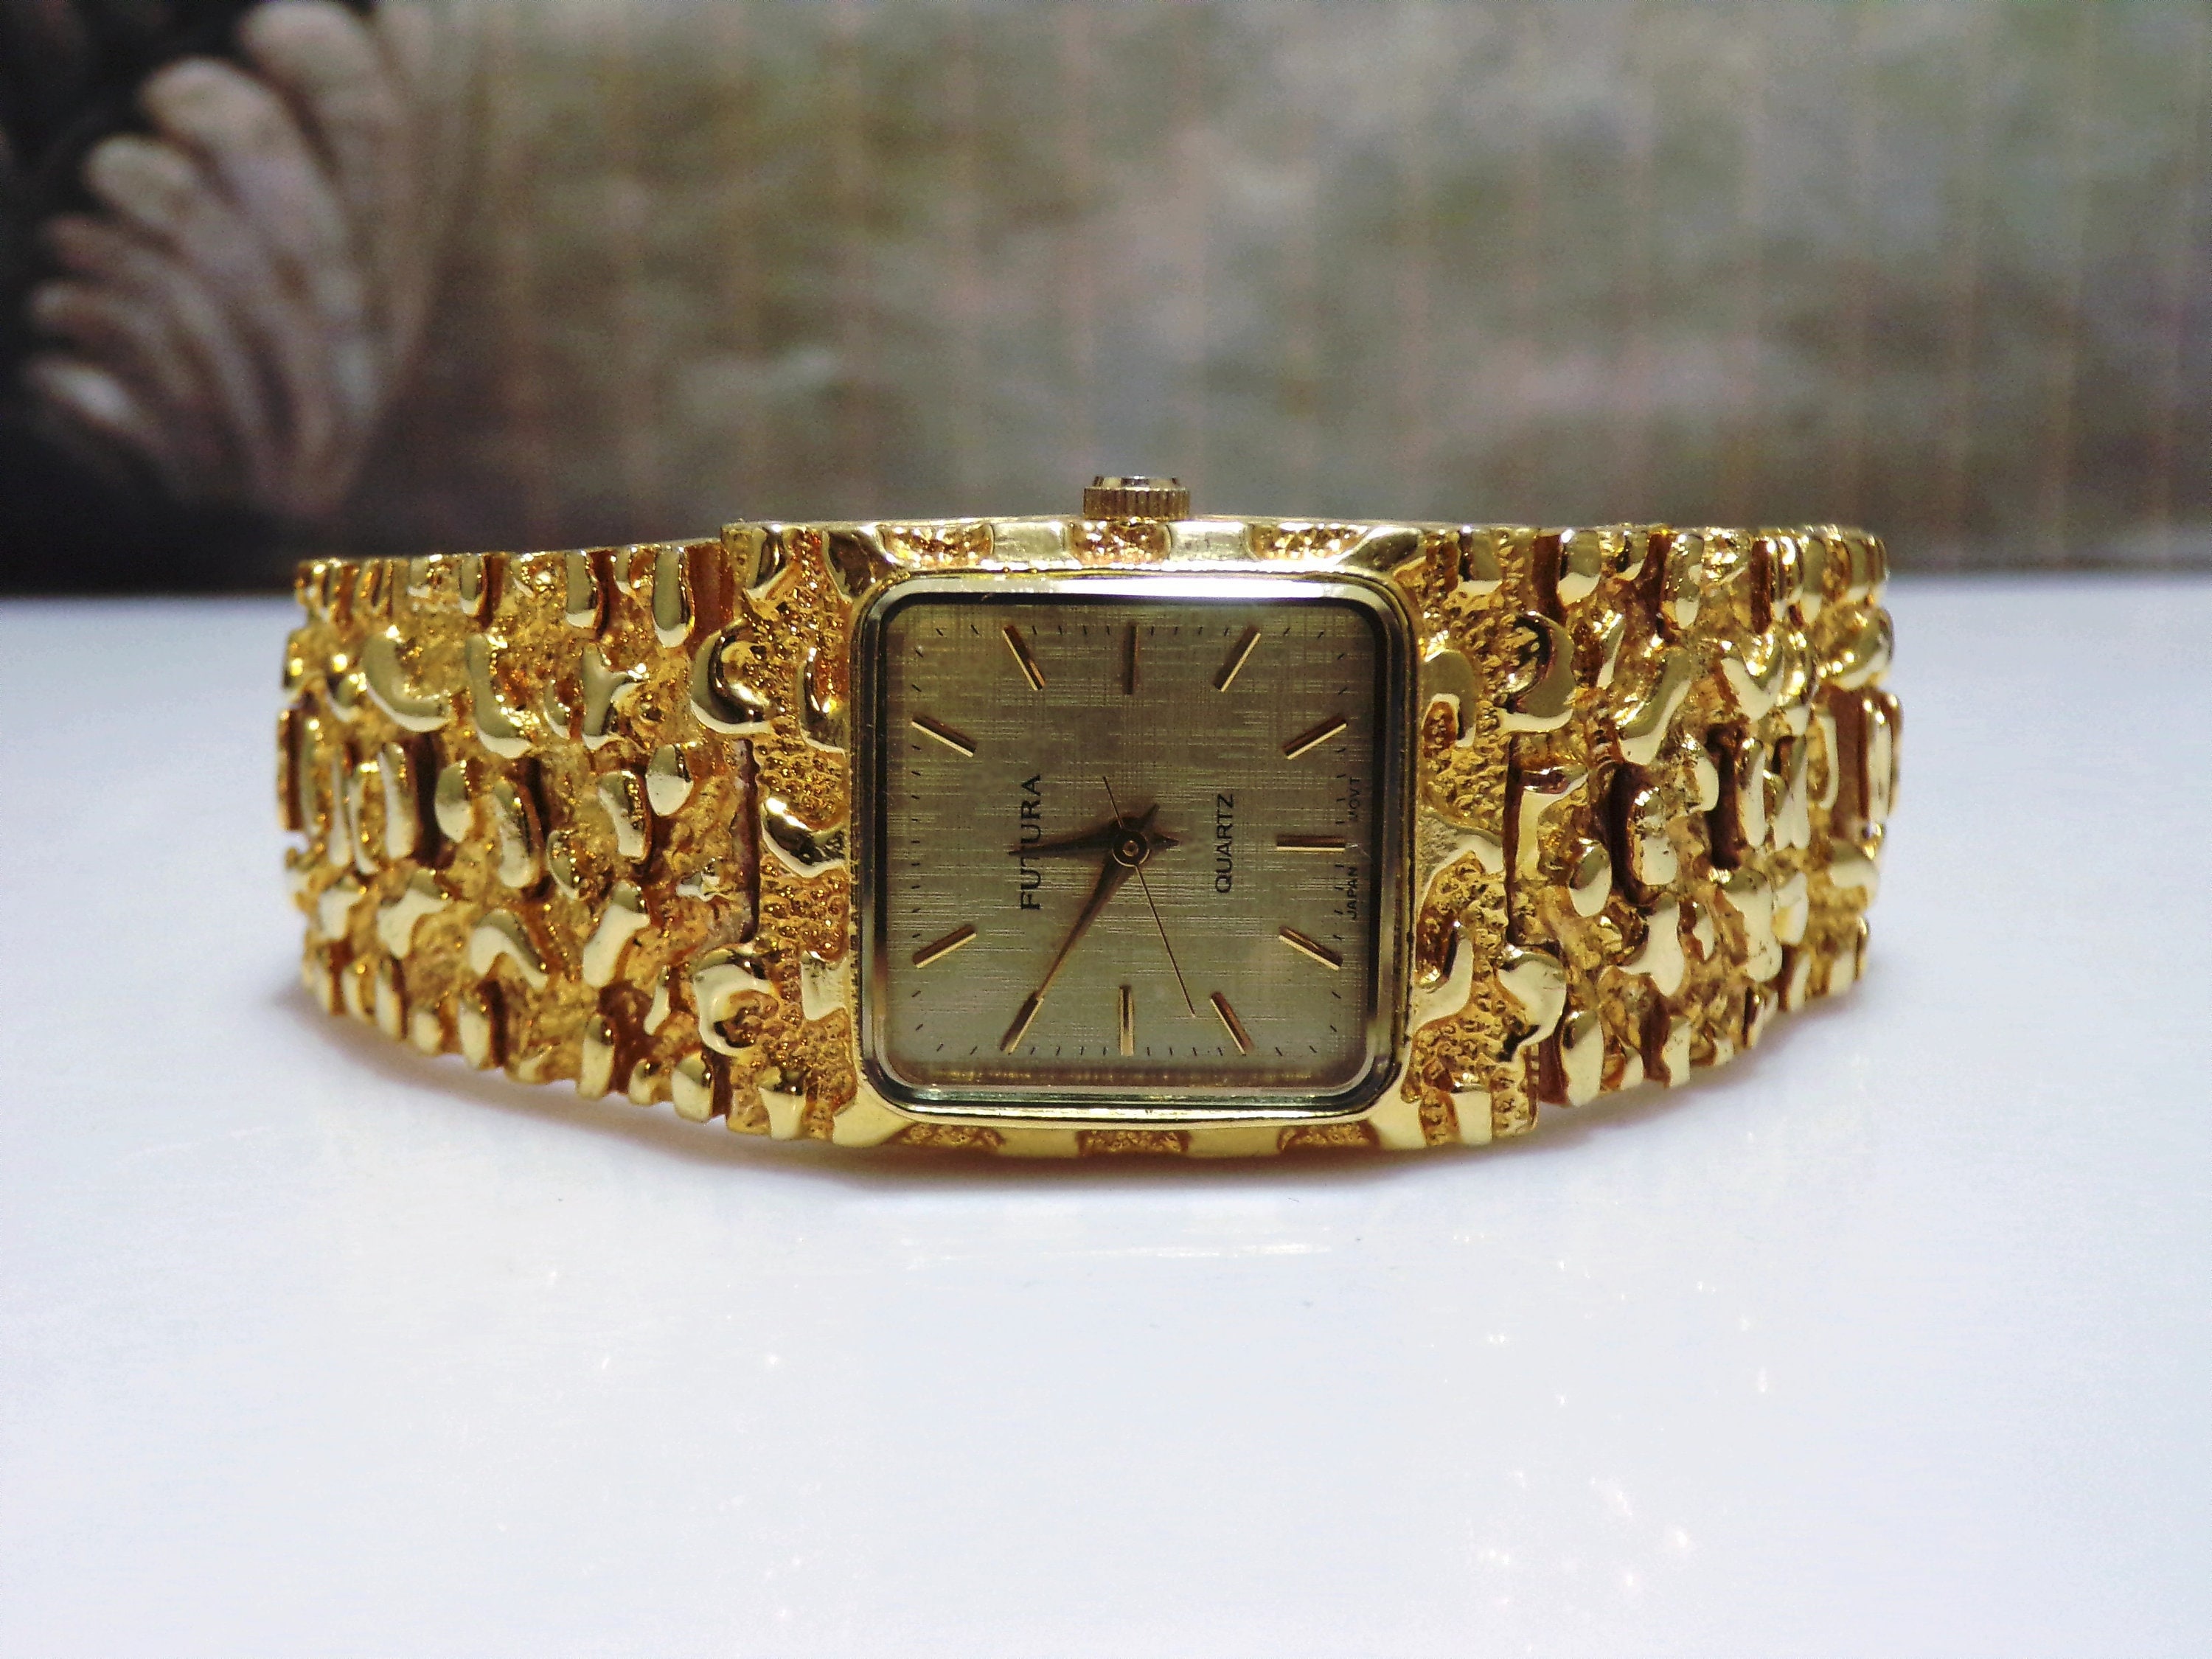 FUTURA Quartz Wrist Watch, Gold Plated Nugget Style Wrist Watch, Sleek ...